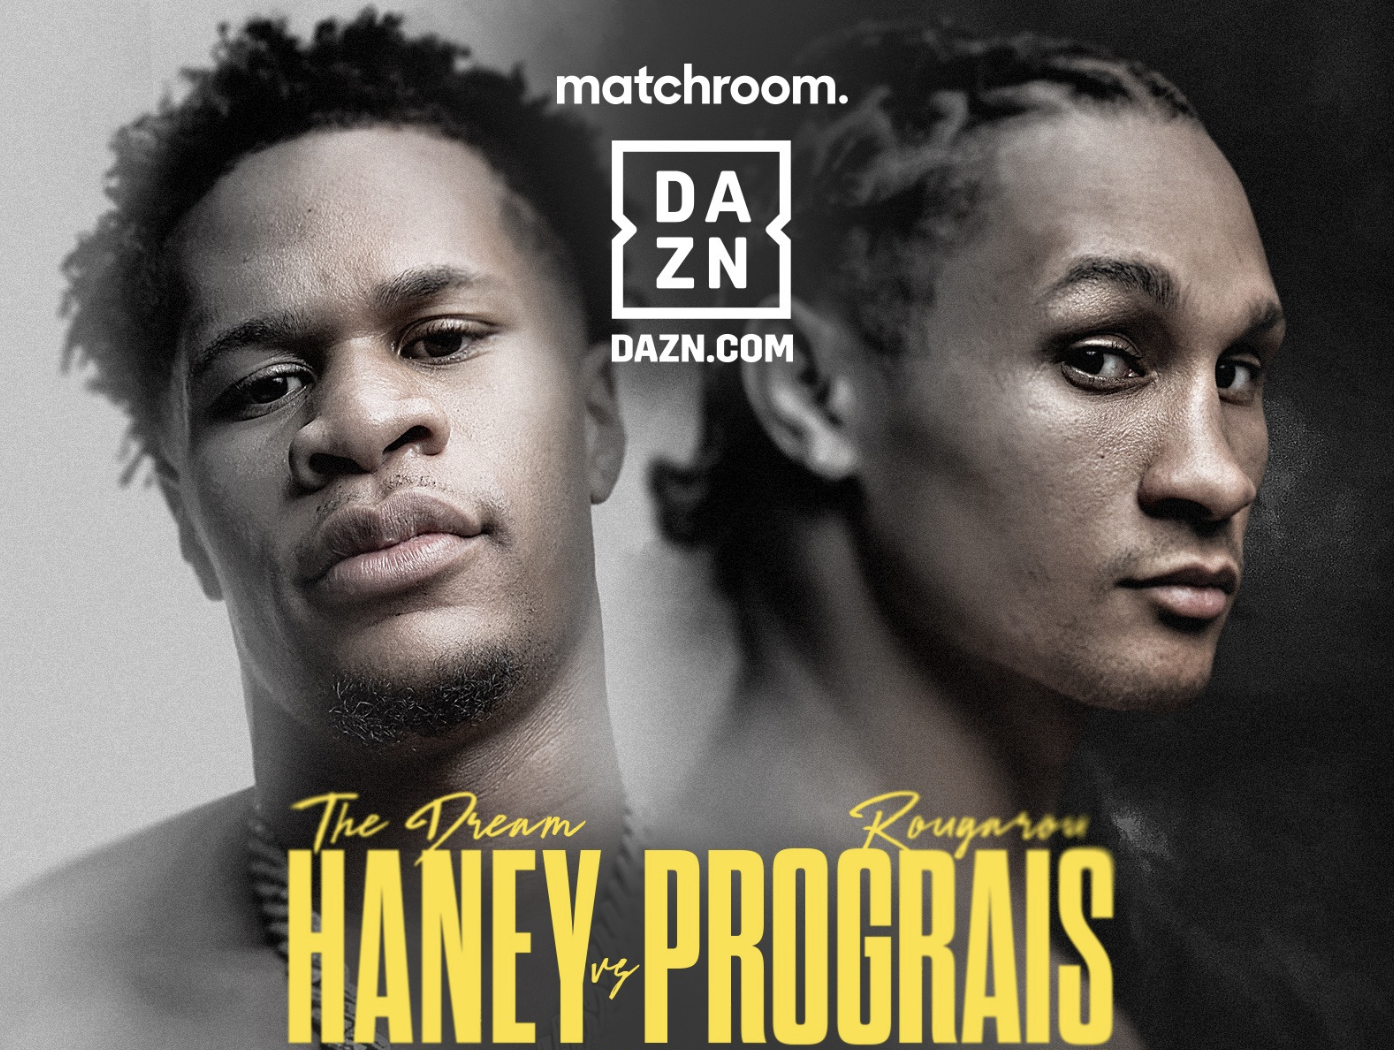 Matchroom confirms Devin Haney vs. Regis Prograis for December 9 in San Francisco